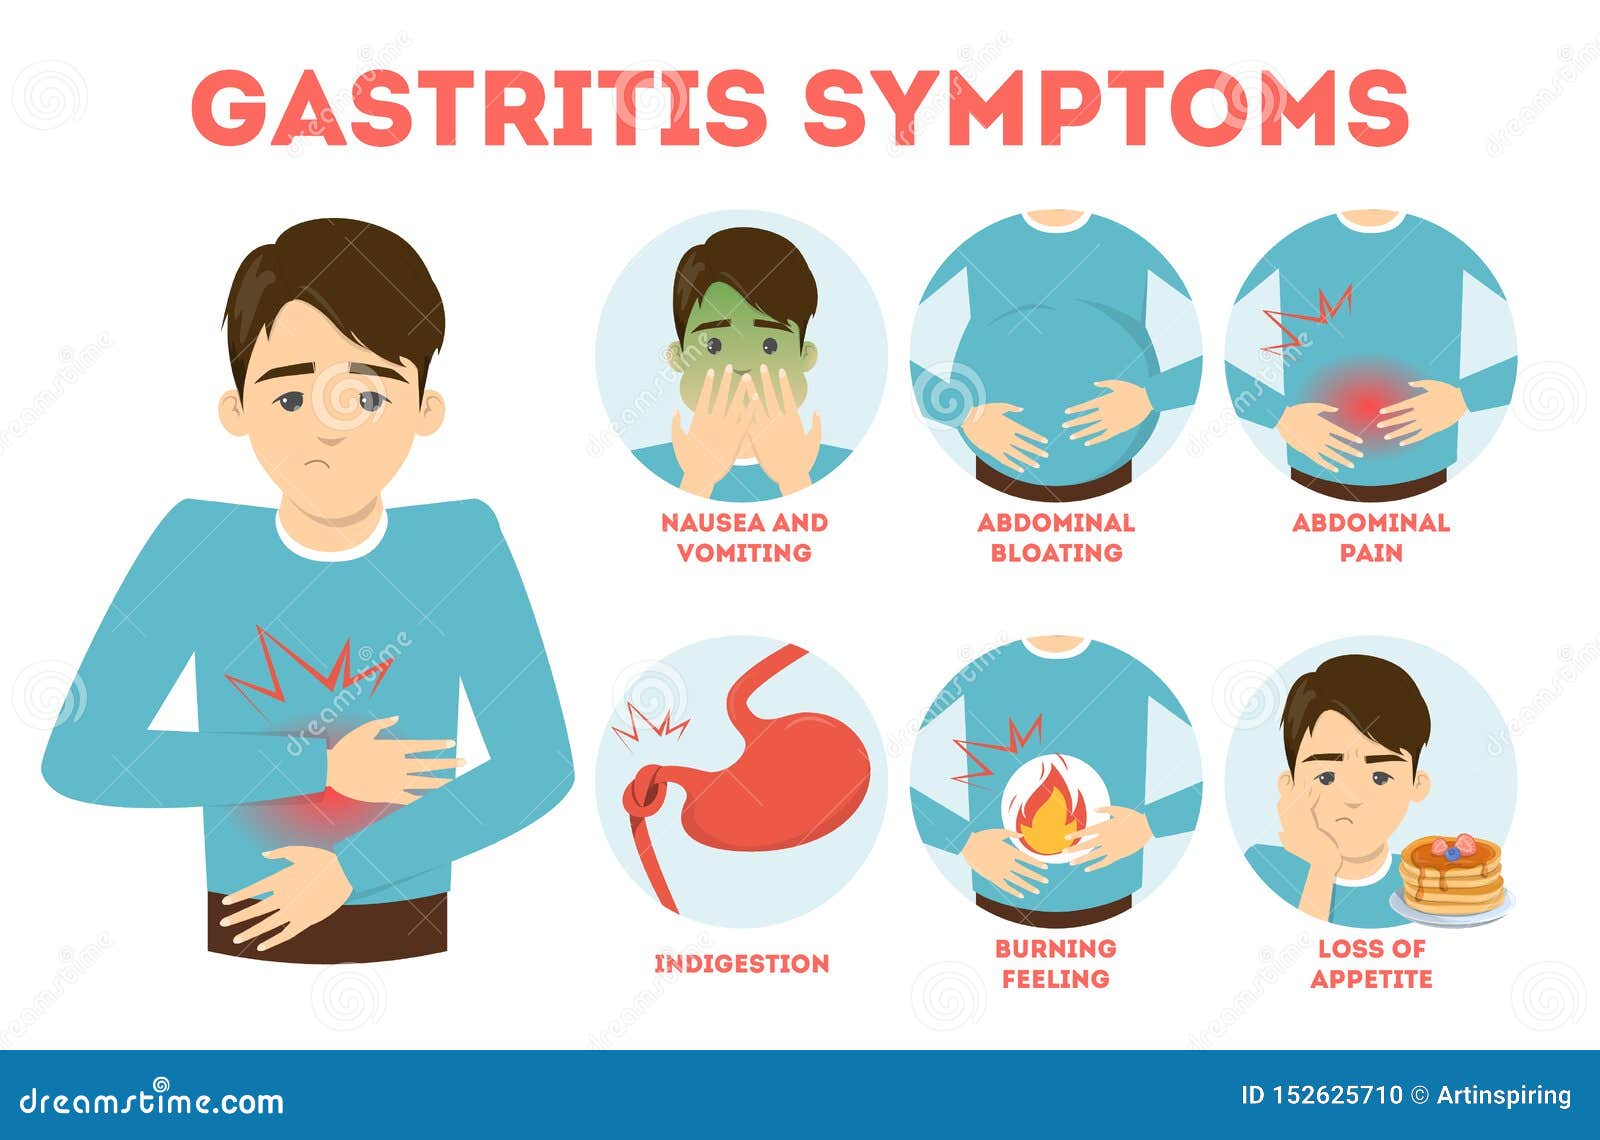 Gastritis Symptoms Signs And Symptoms Complications | Porn Sex Picture